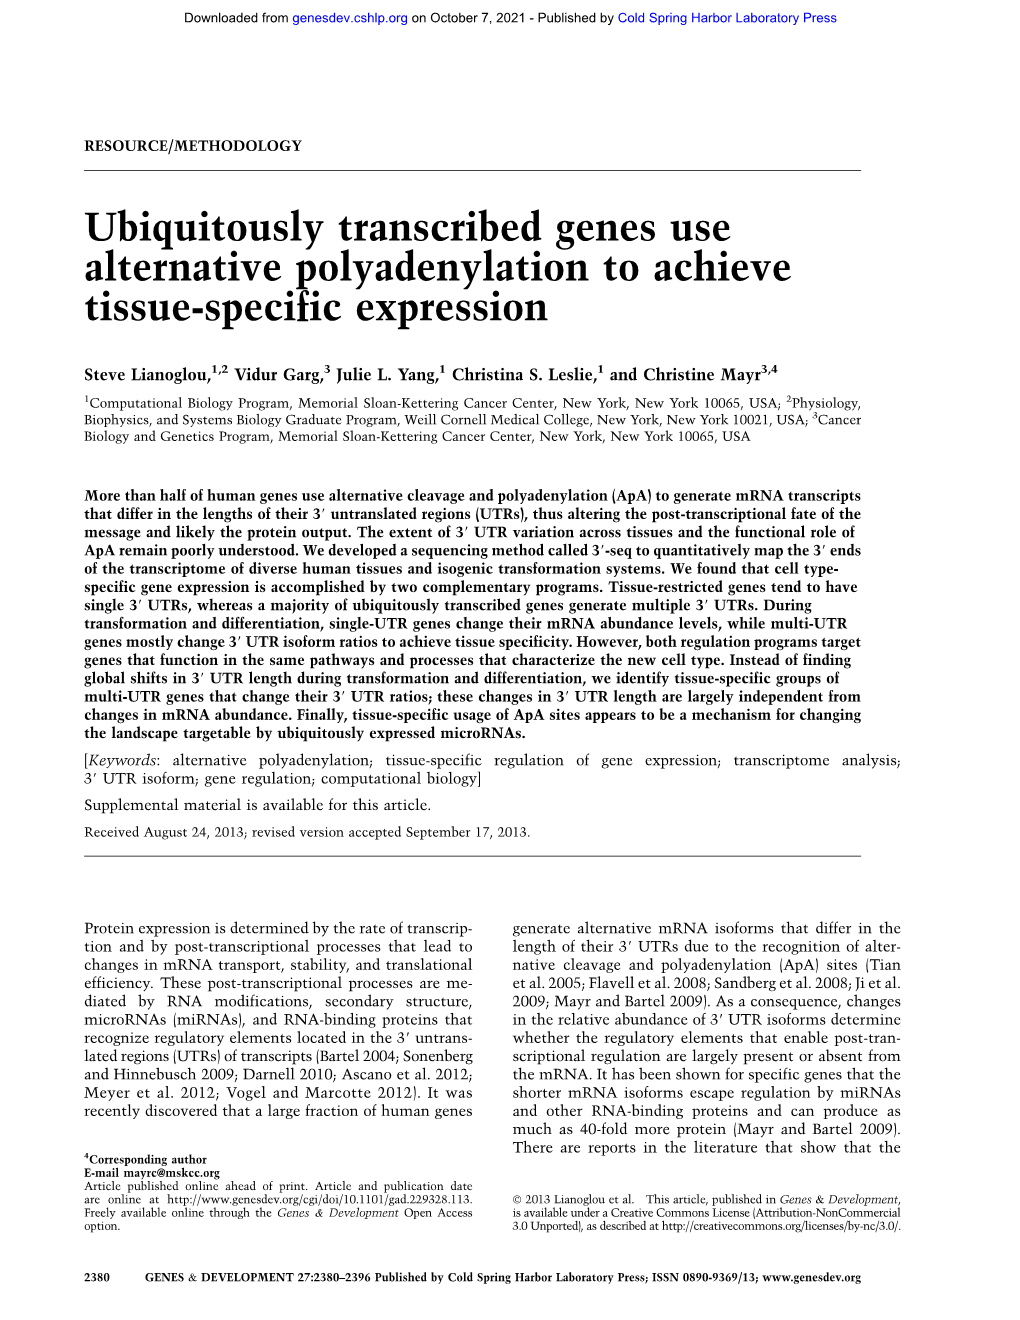 Ubiquitously Transcribed Genes Use Alternative Polyadenylation to Achieve Tissue-Specific Expression